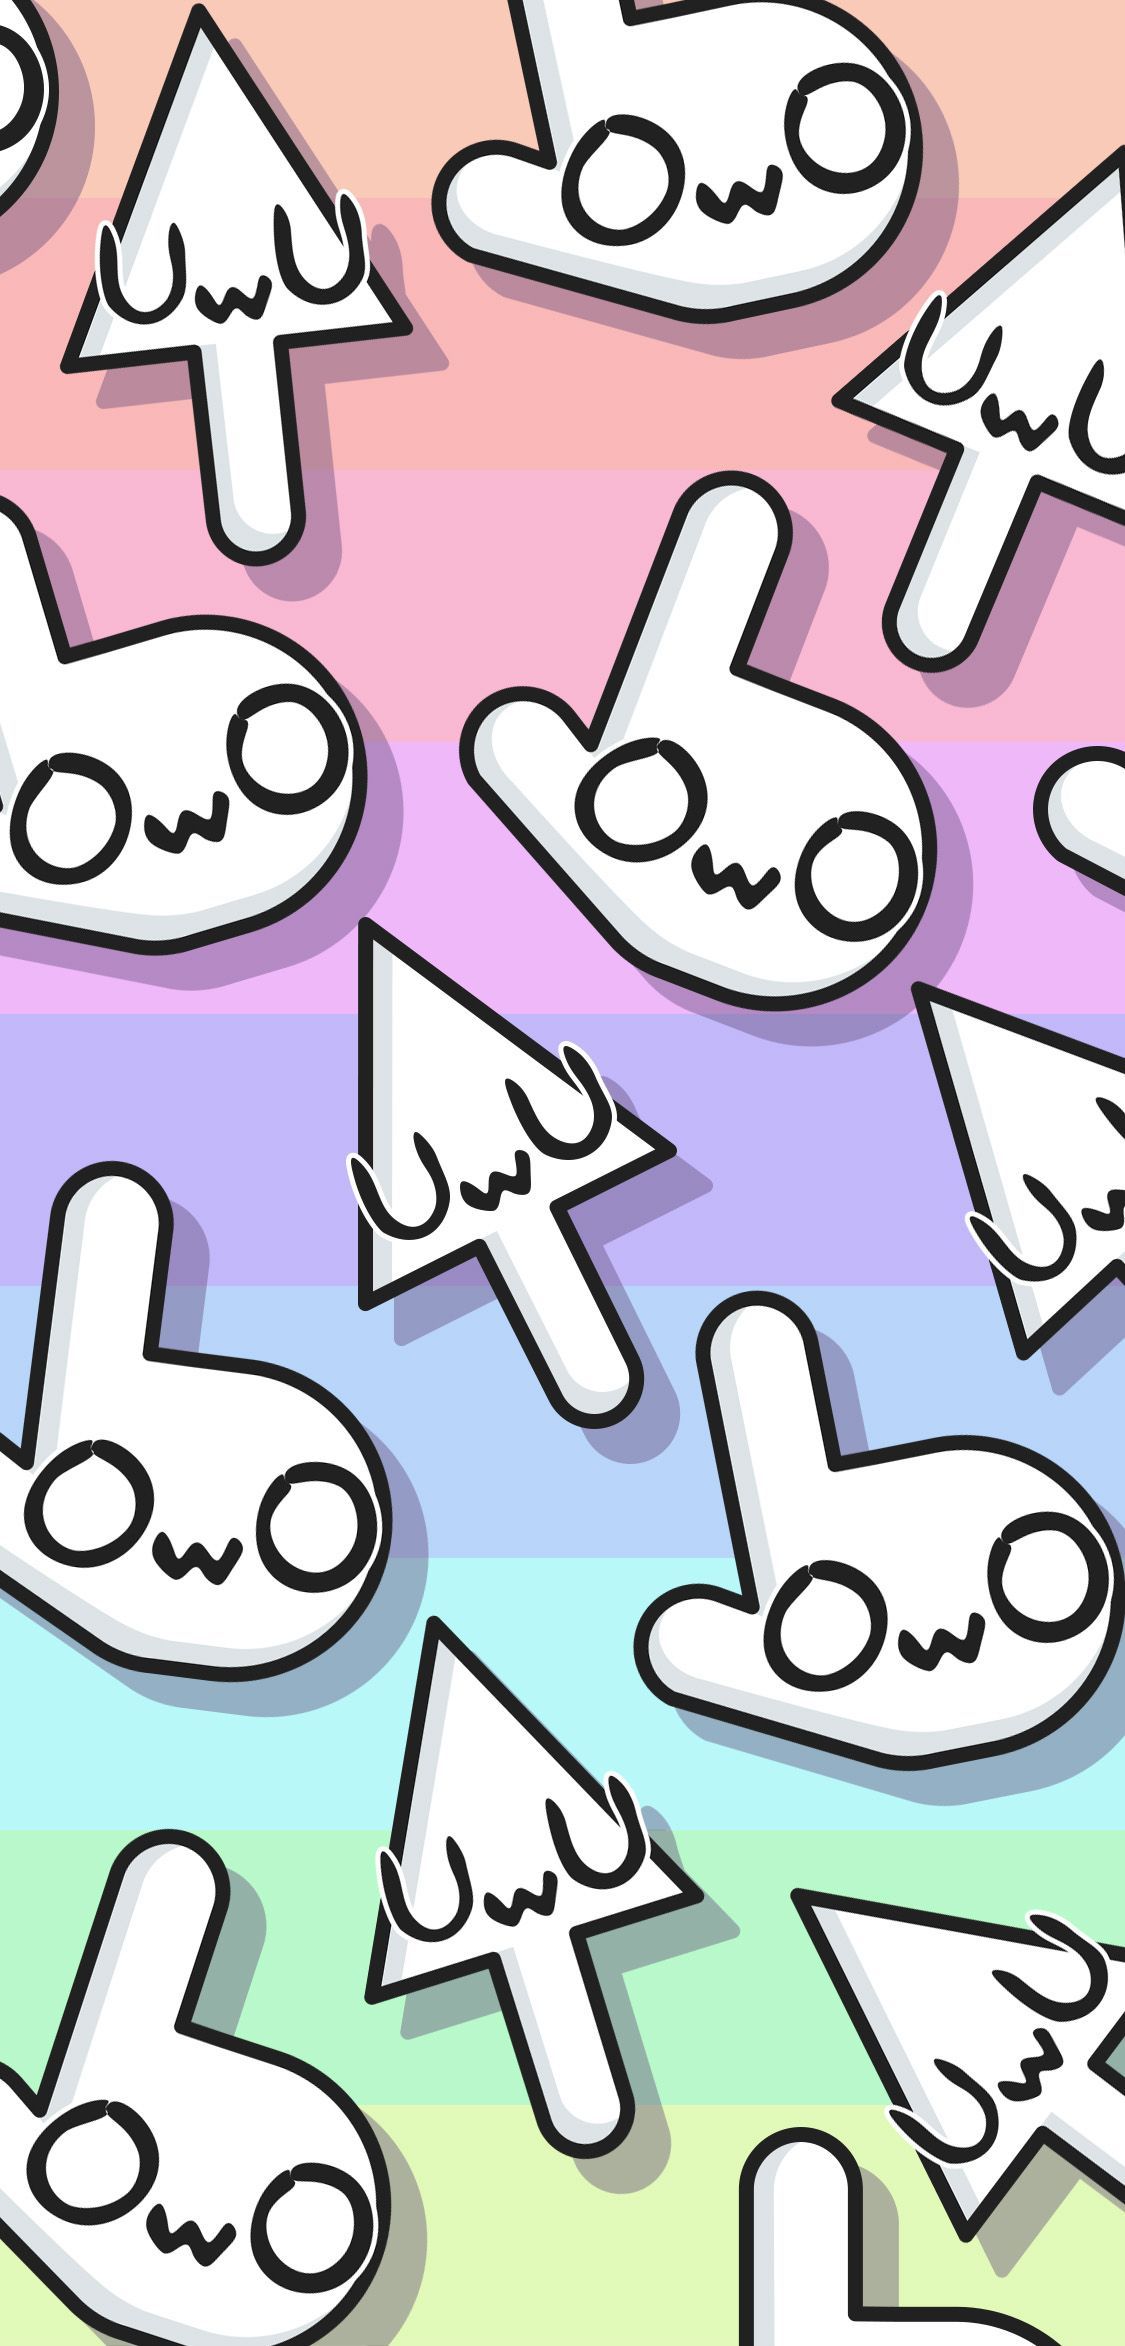 Uwu and OwO Cursor Phone Wallpaper. Cute anime pics, Wallpaper, Rainbow wallpaper